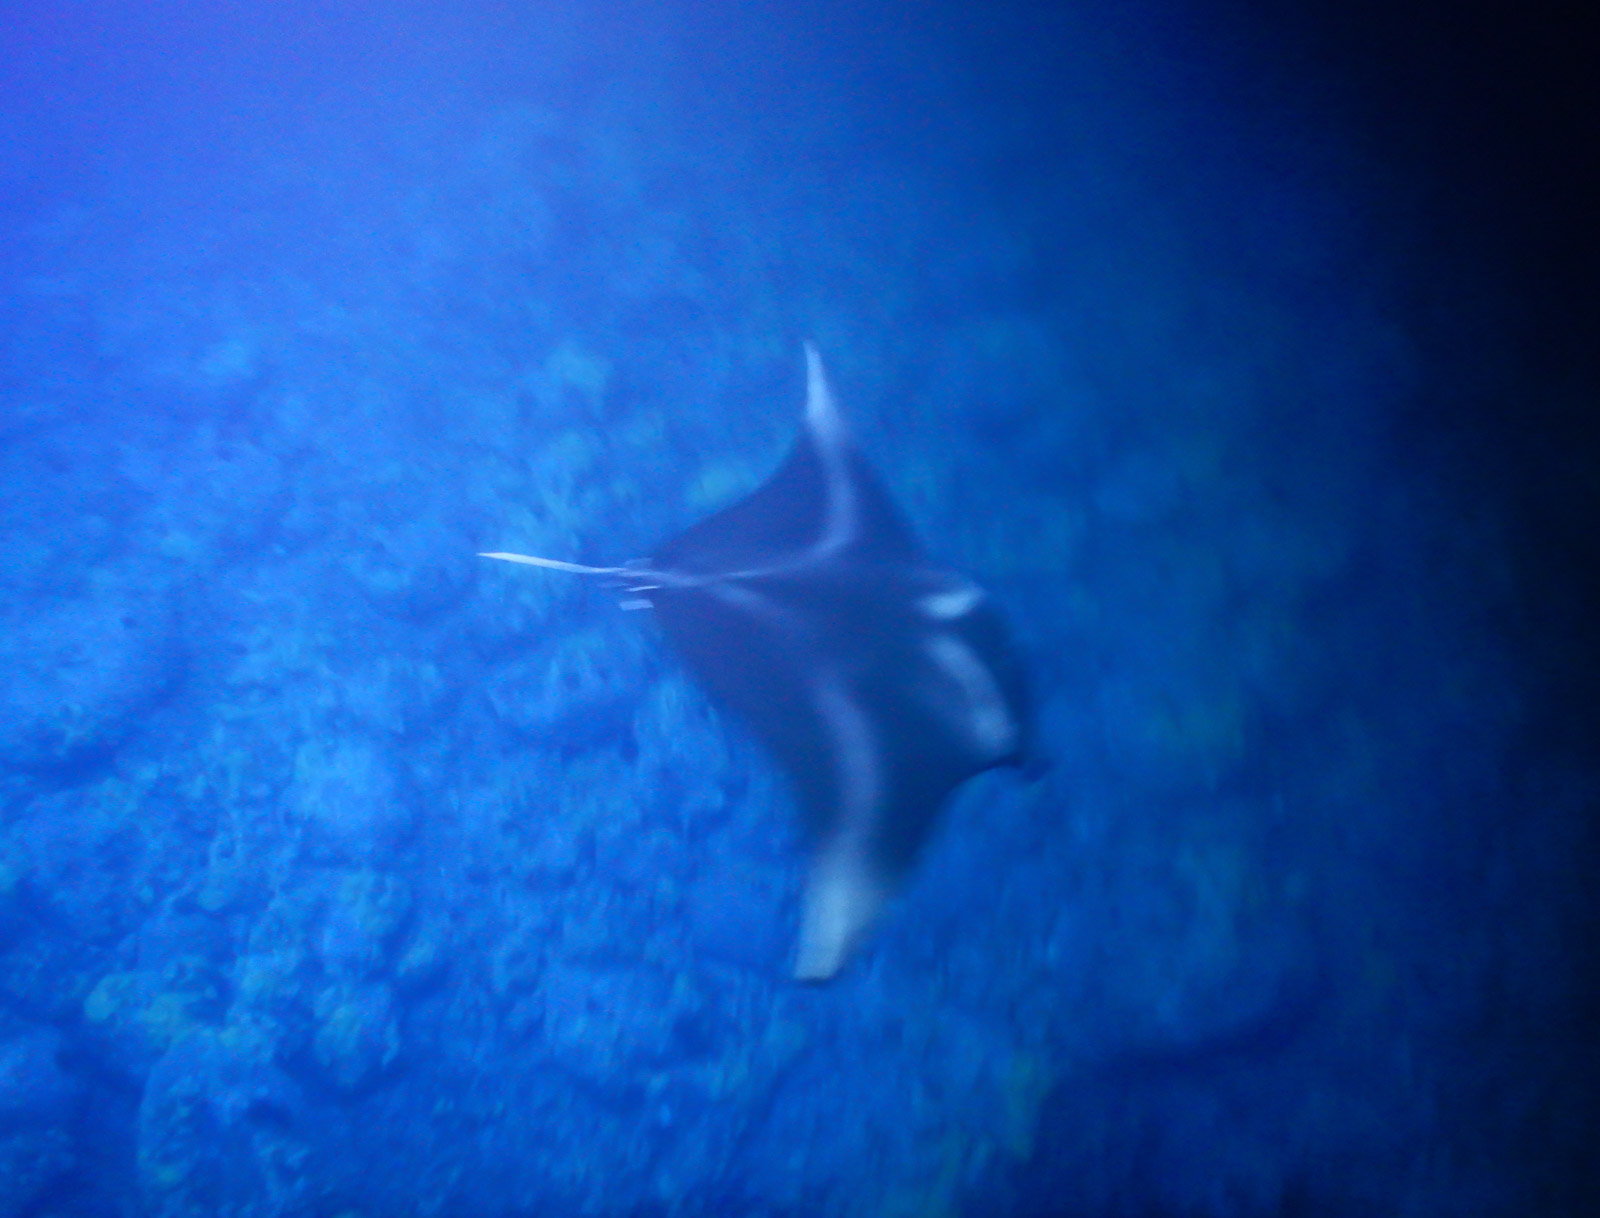 A manta ray swims below near the bottom of a blue ocean near Kona, Hawaii